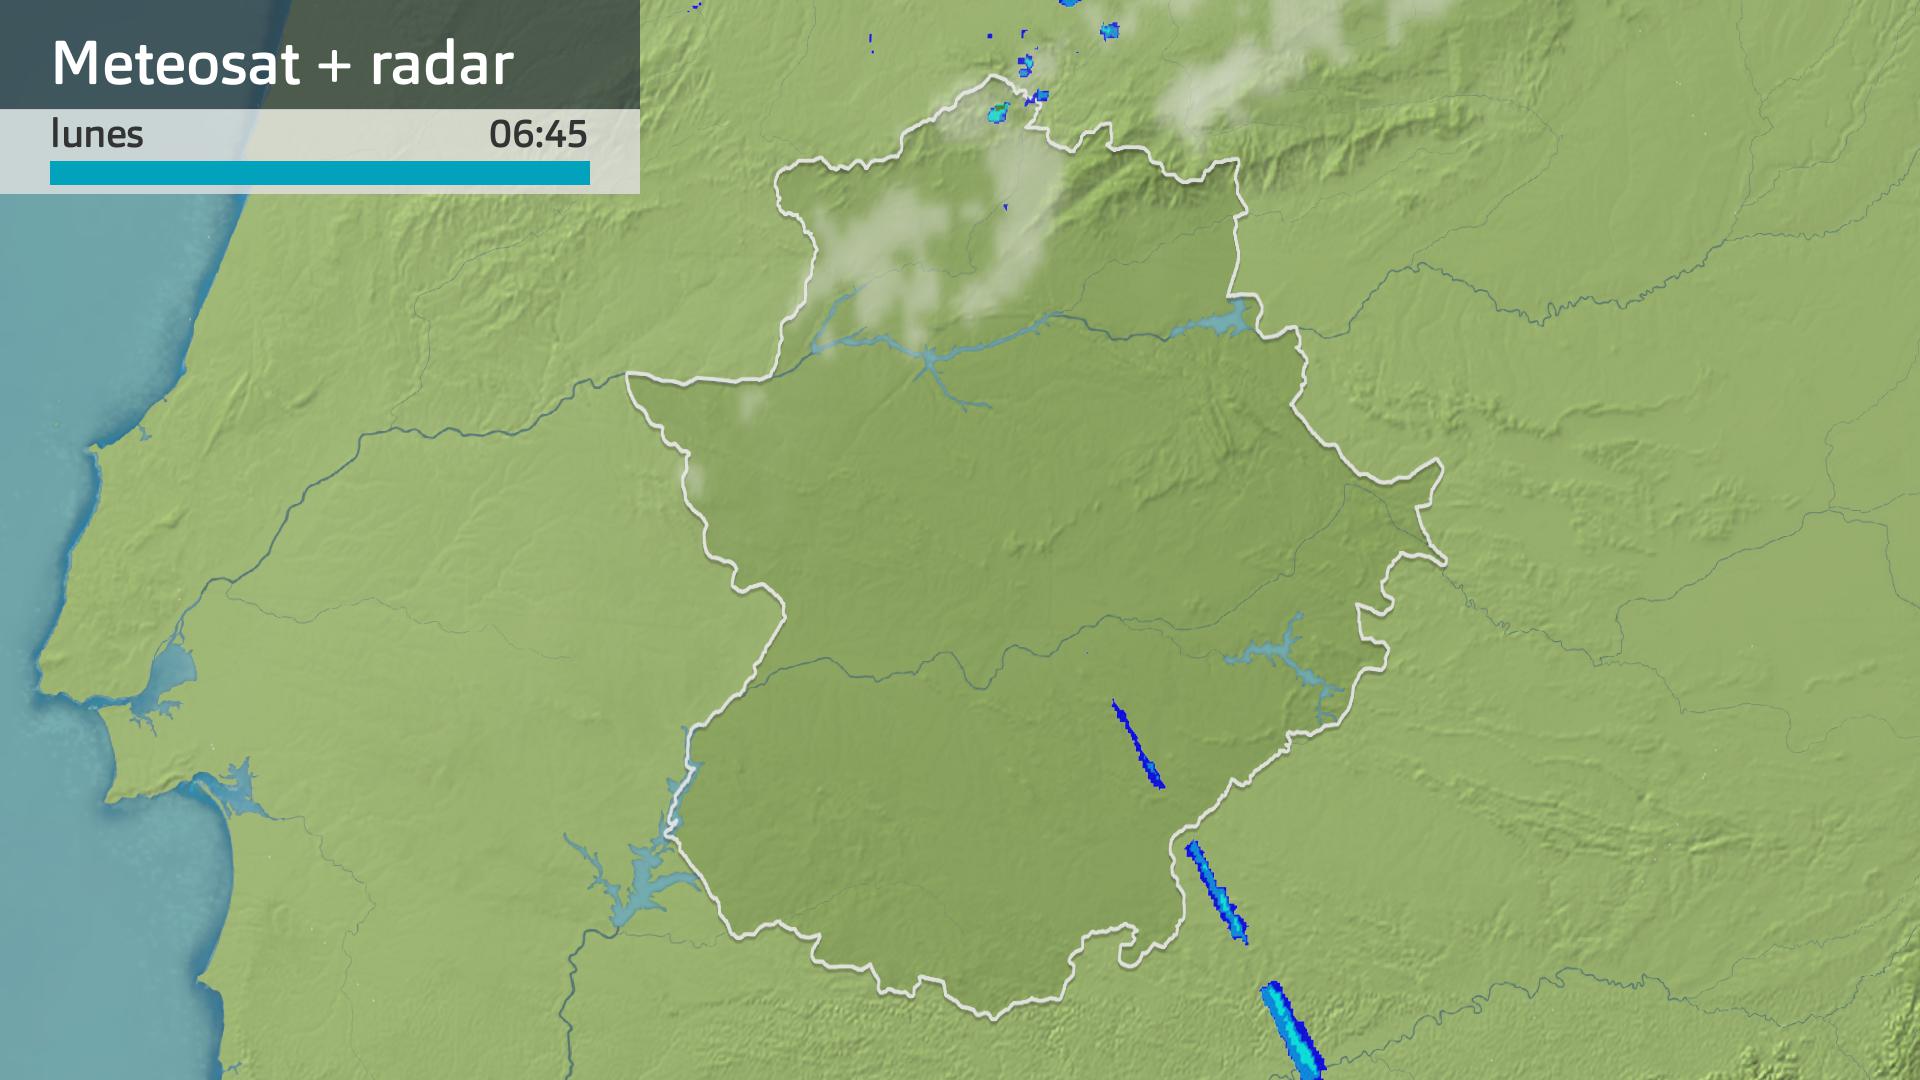 Imagen del Meteosat + radar meteorológico lunes 15 de julio 6:45 h.